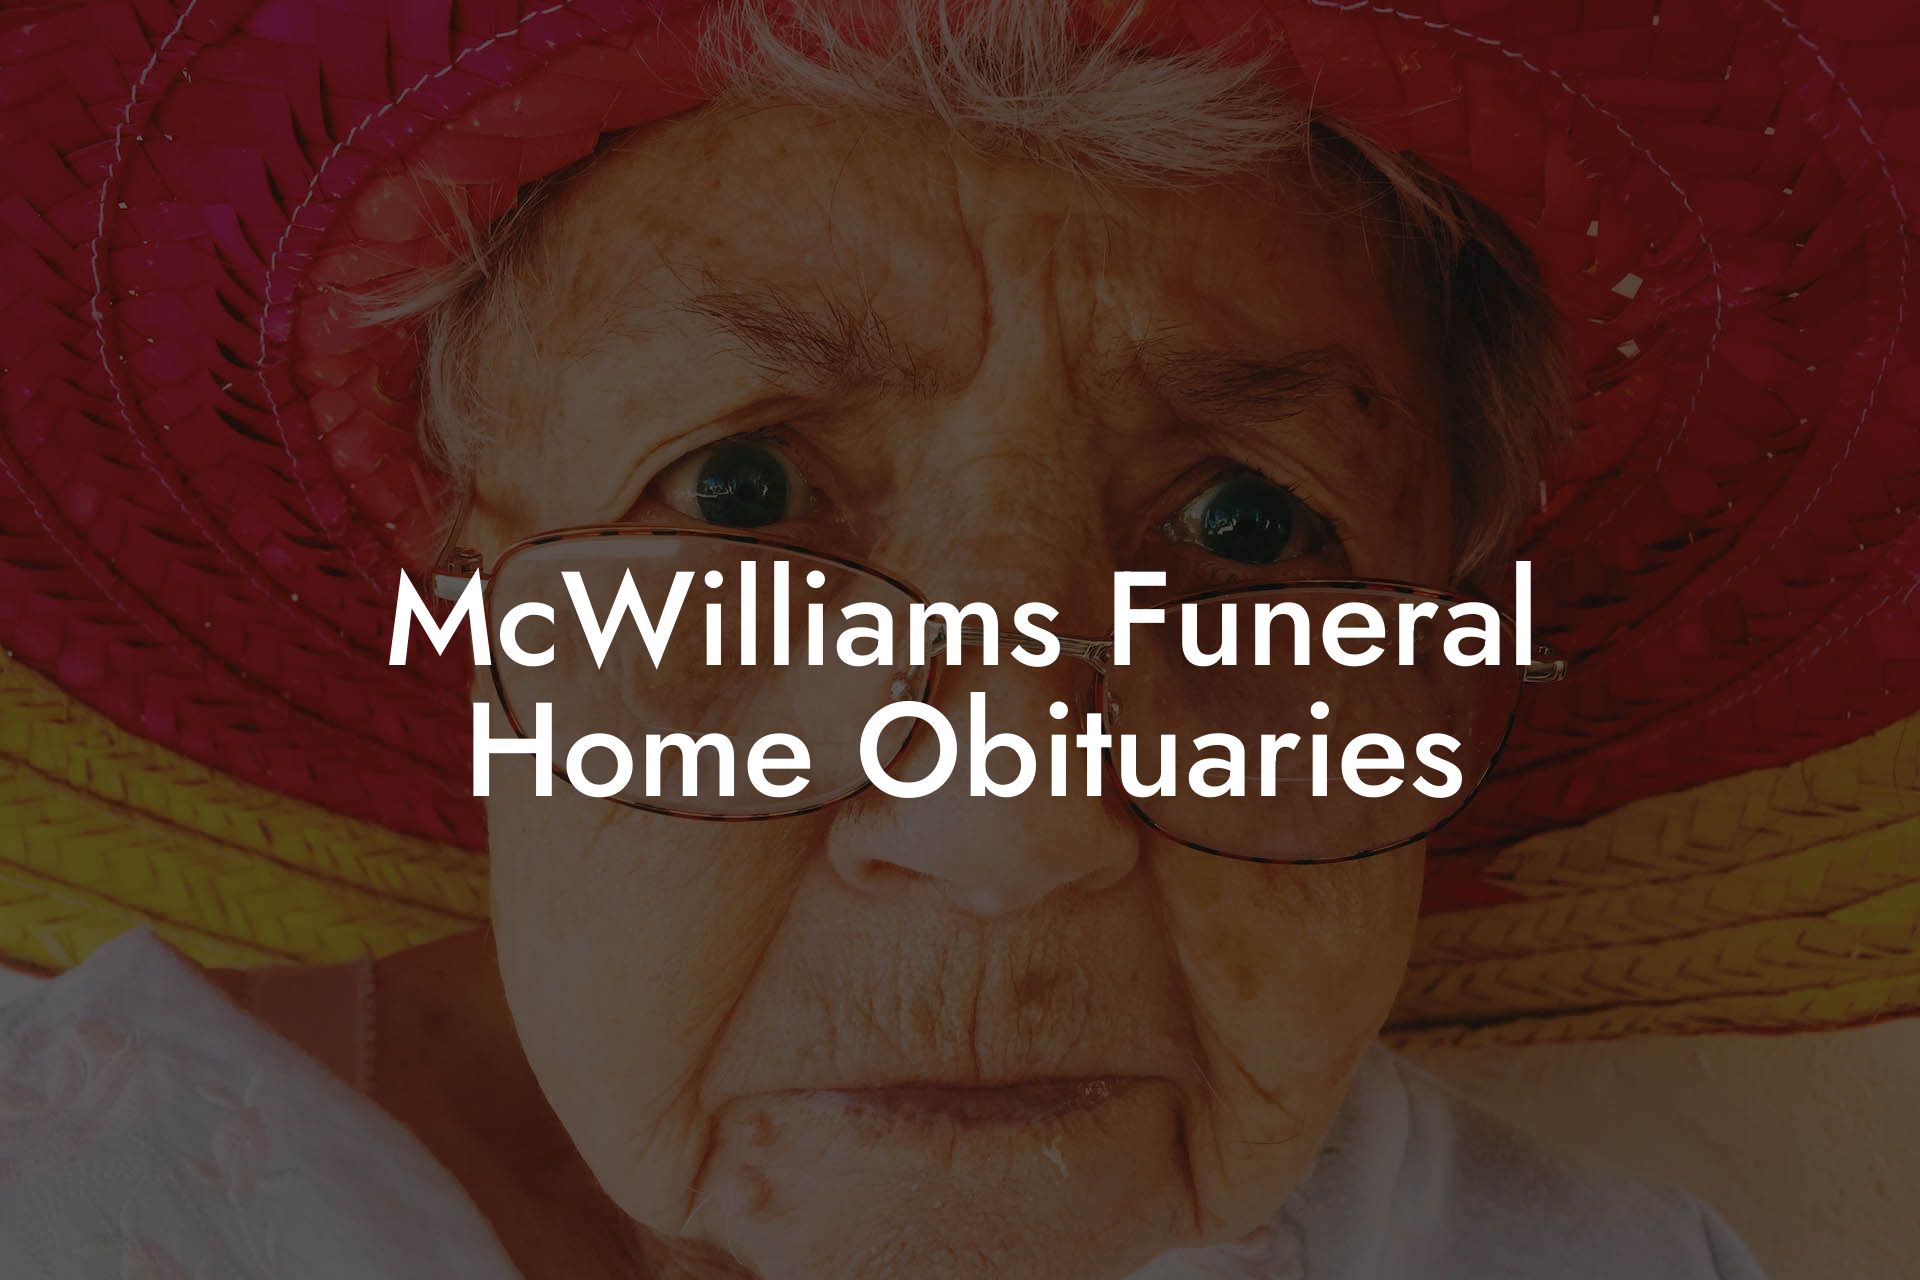 McWilliams Funeral Home Obituaries